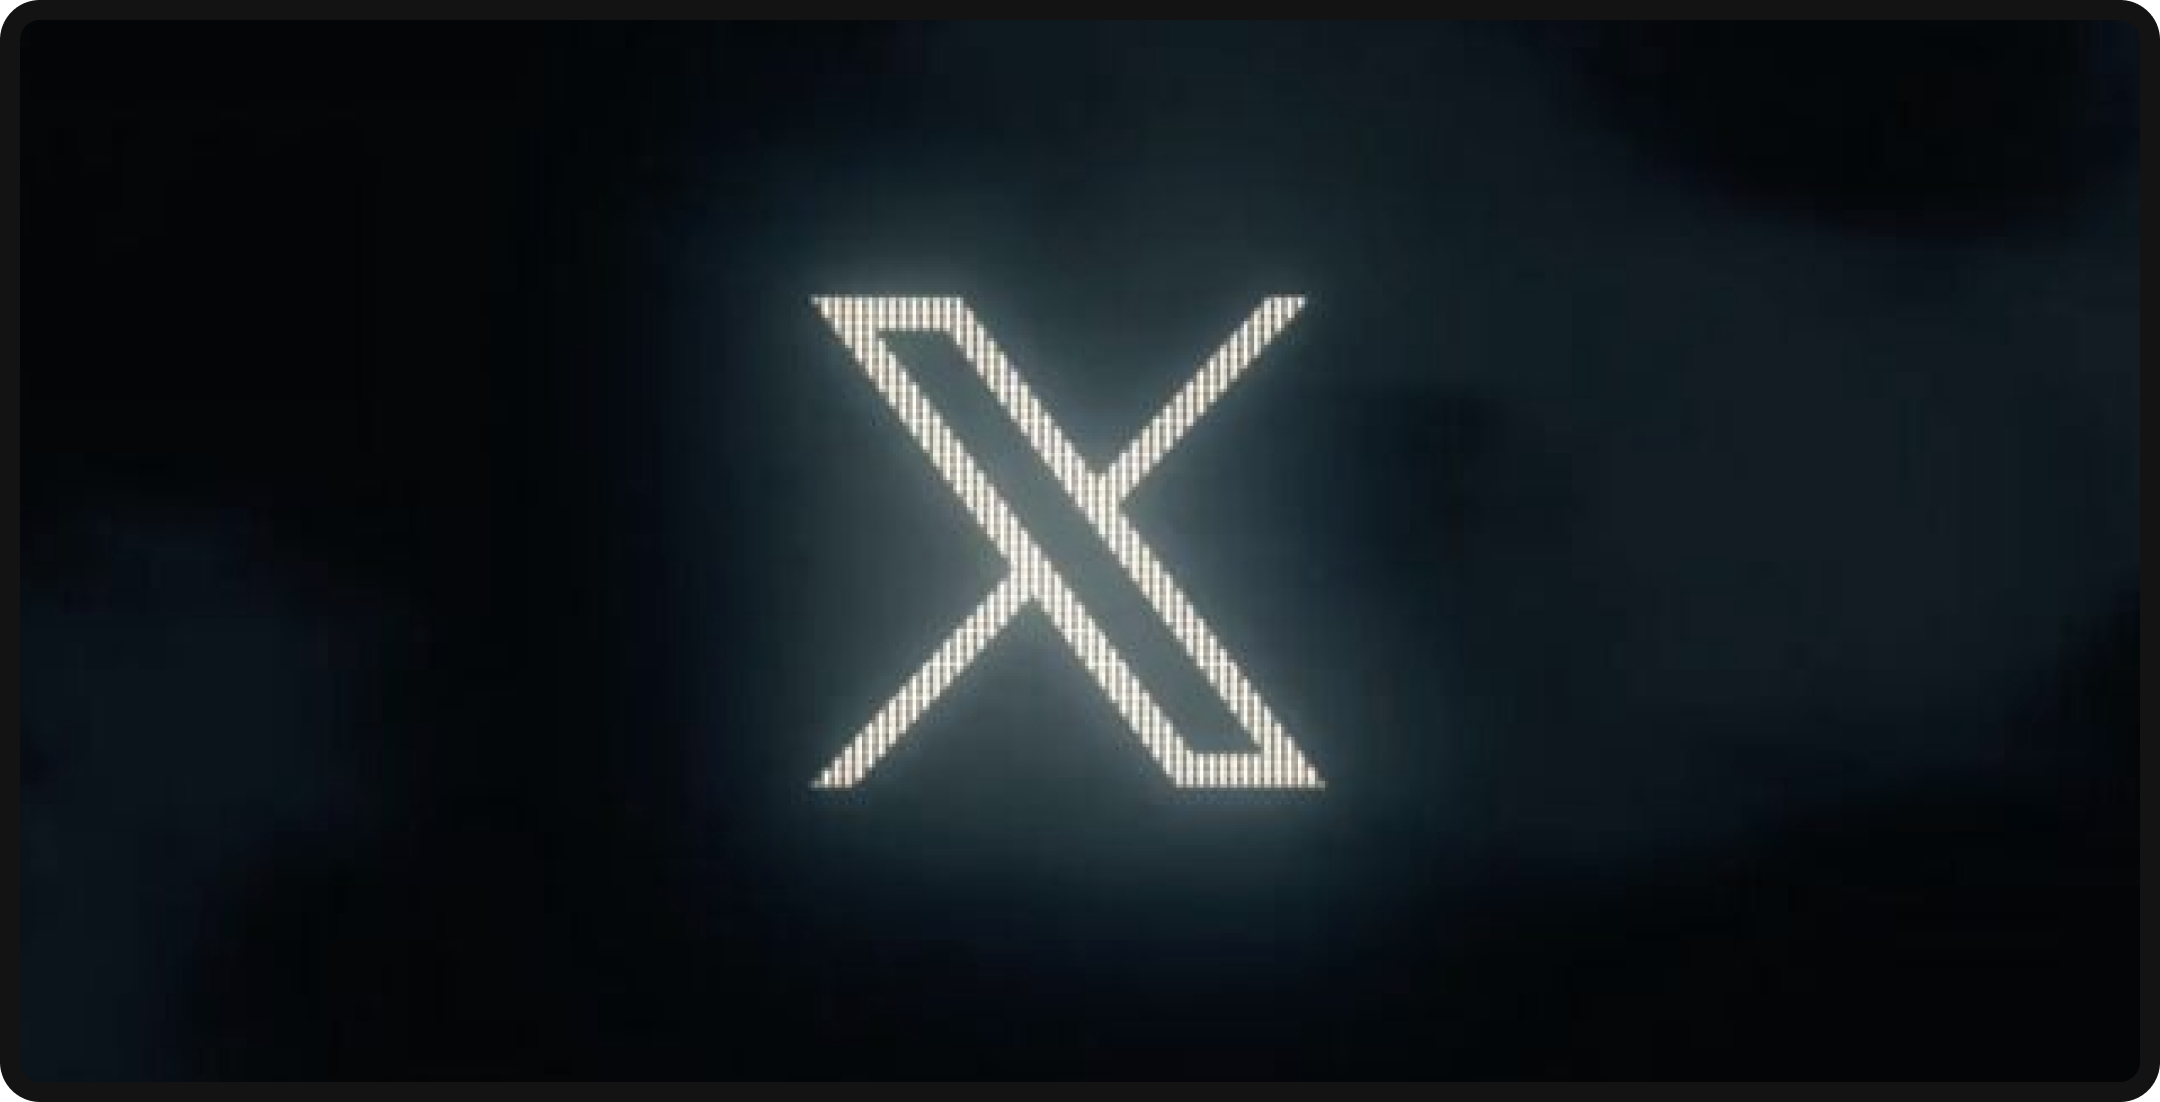 New Twitter logo: X